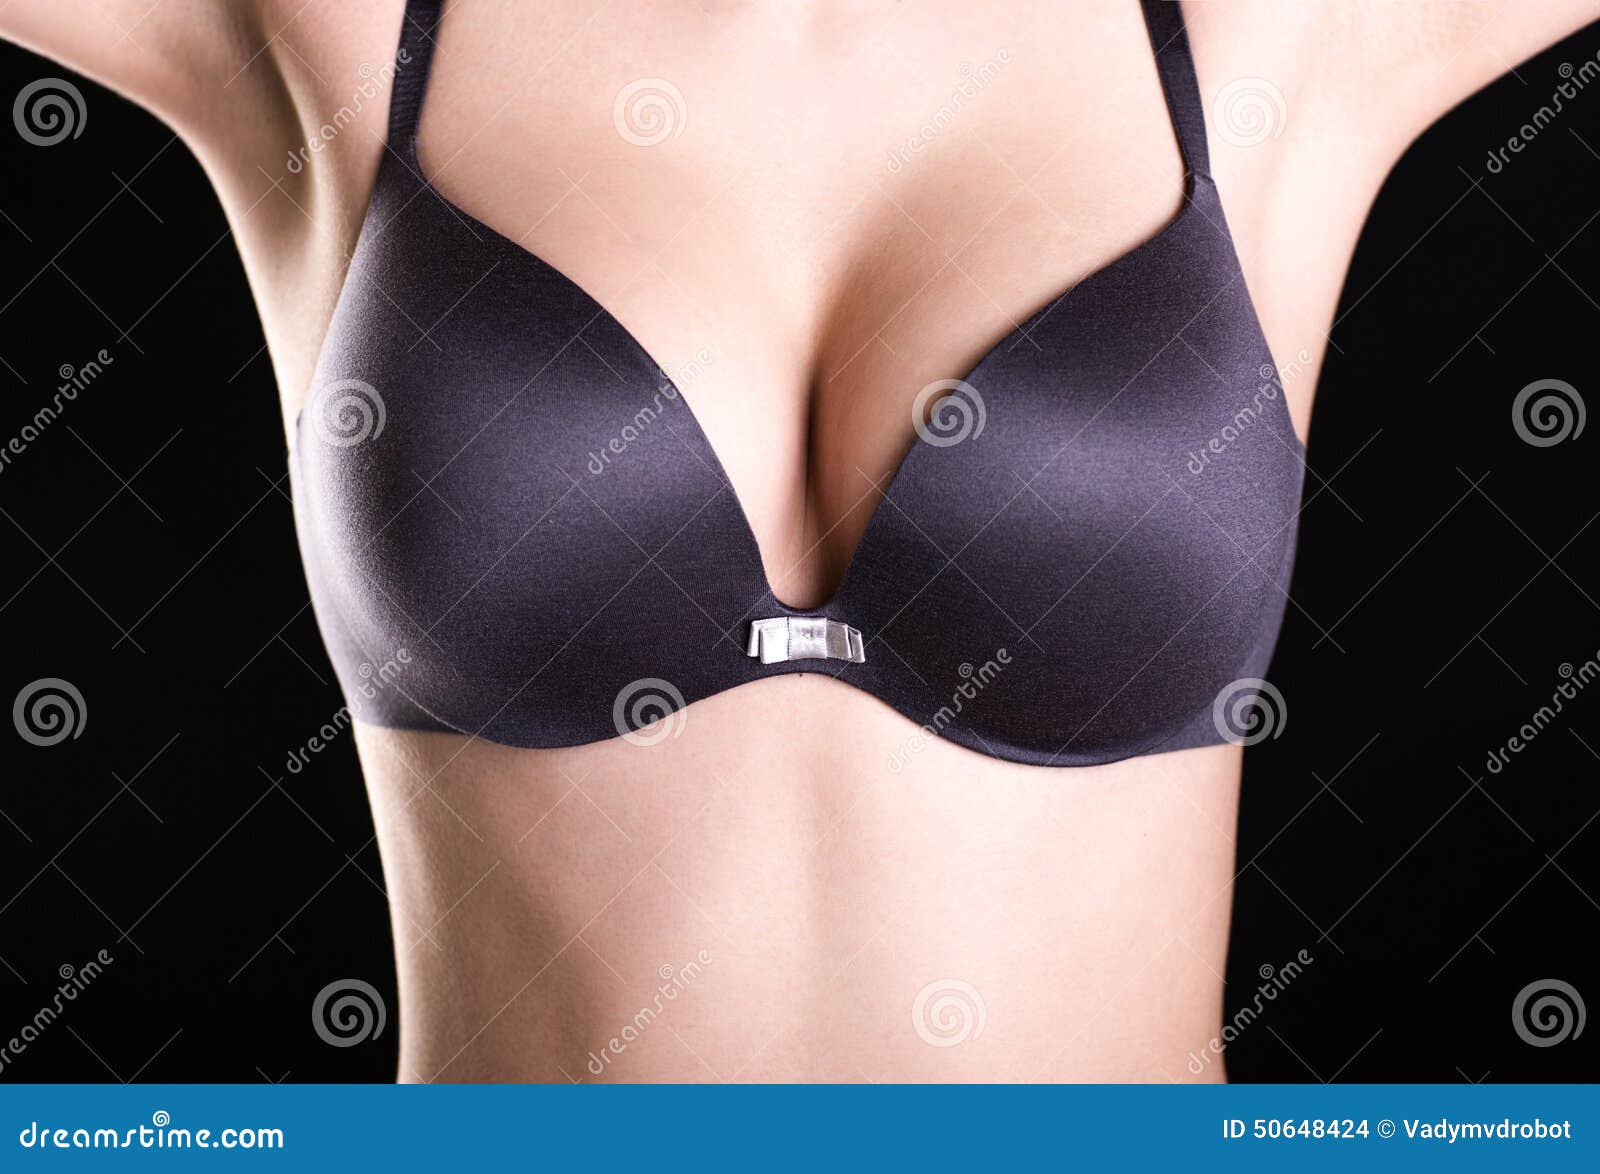 https://thumbs.dreamstime.com/z/woman-s-breasts-bra-beautiful-50648424.jpg